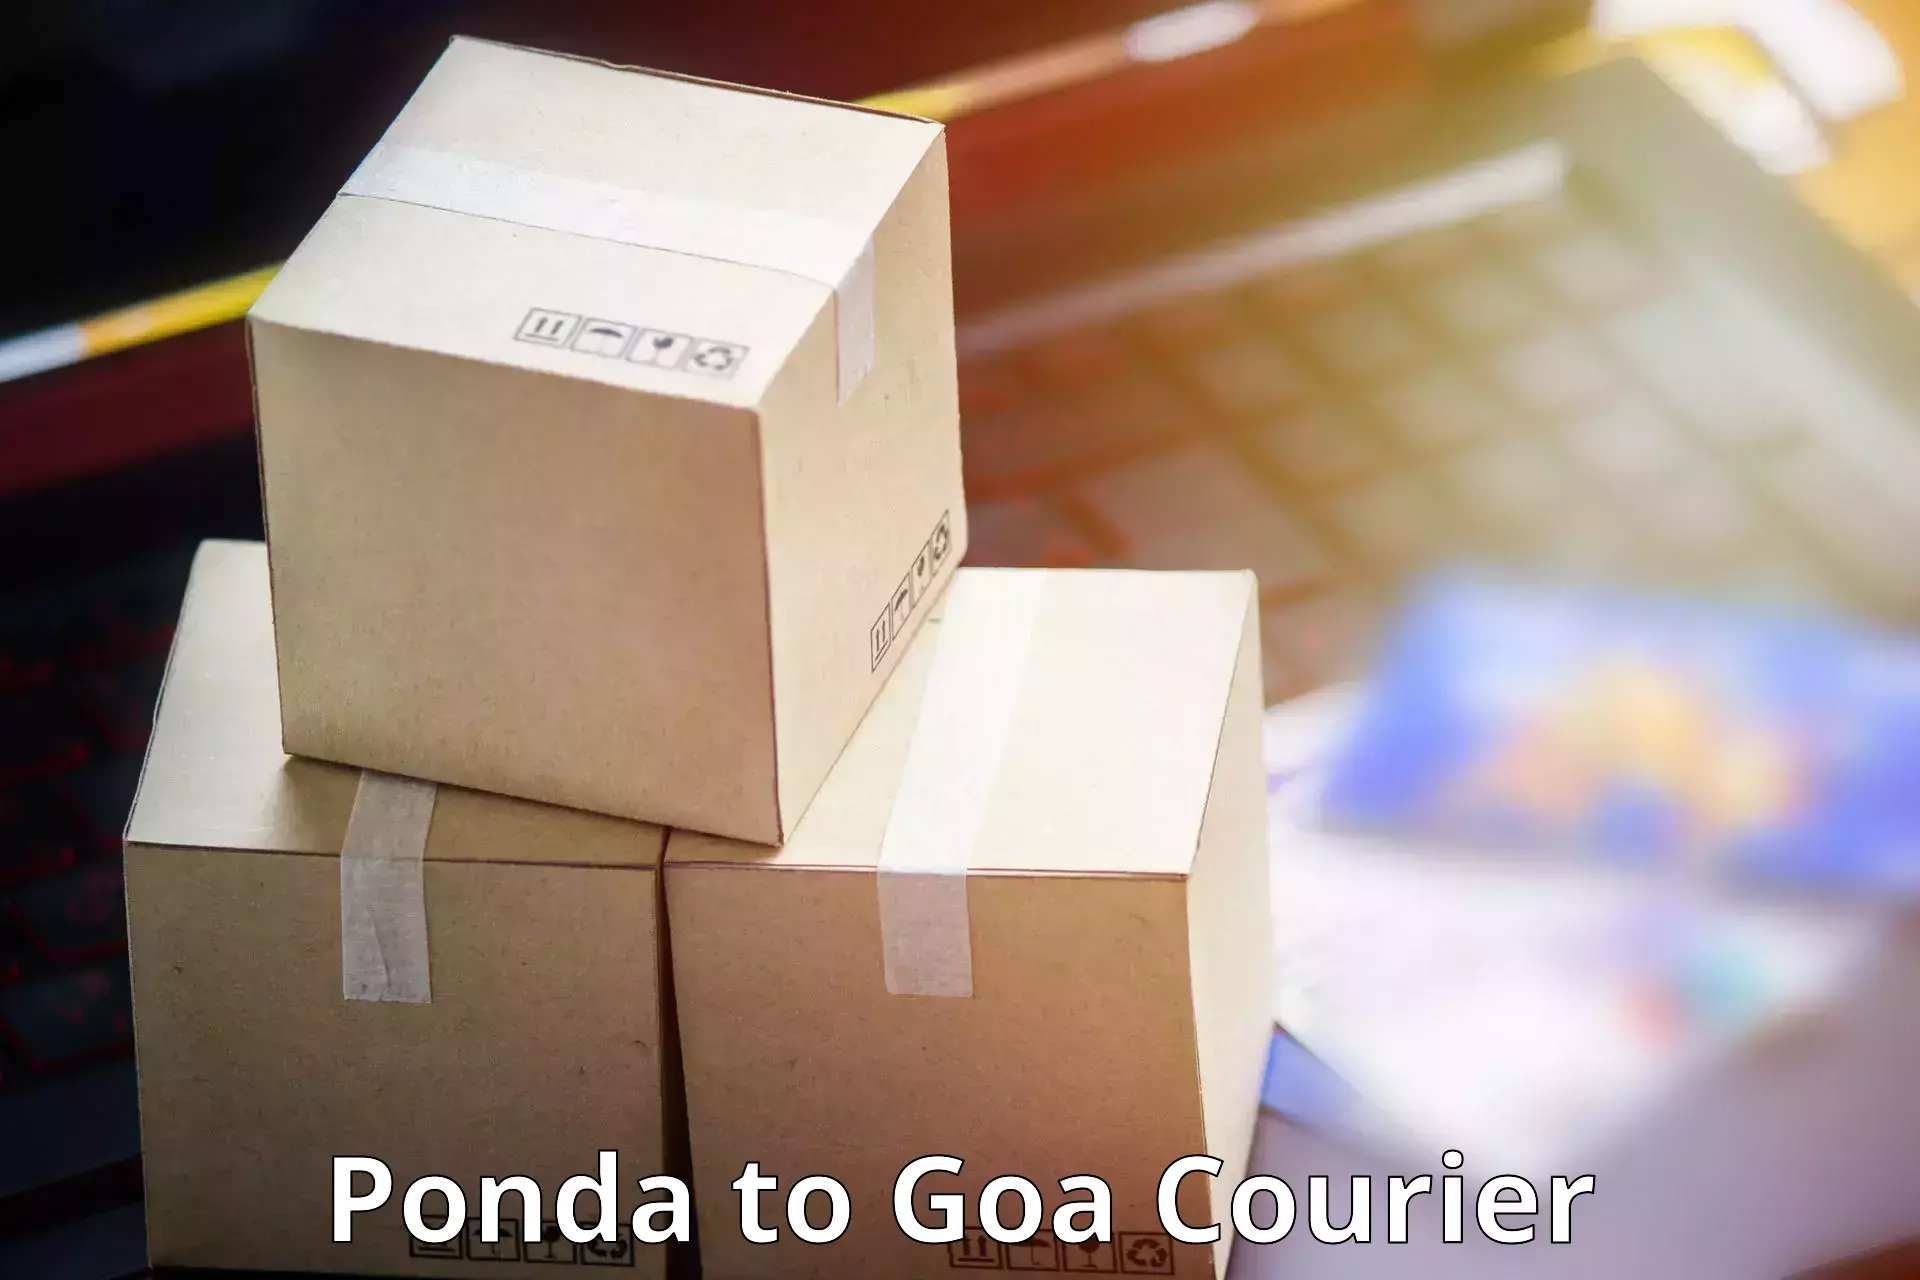 Global shipping networks Ponda to Goa